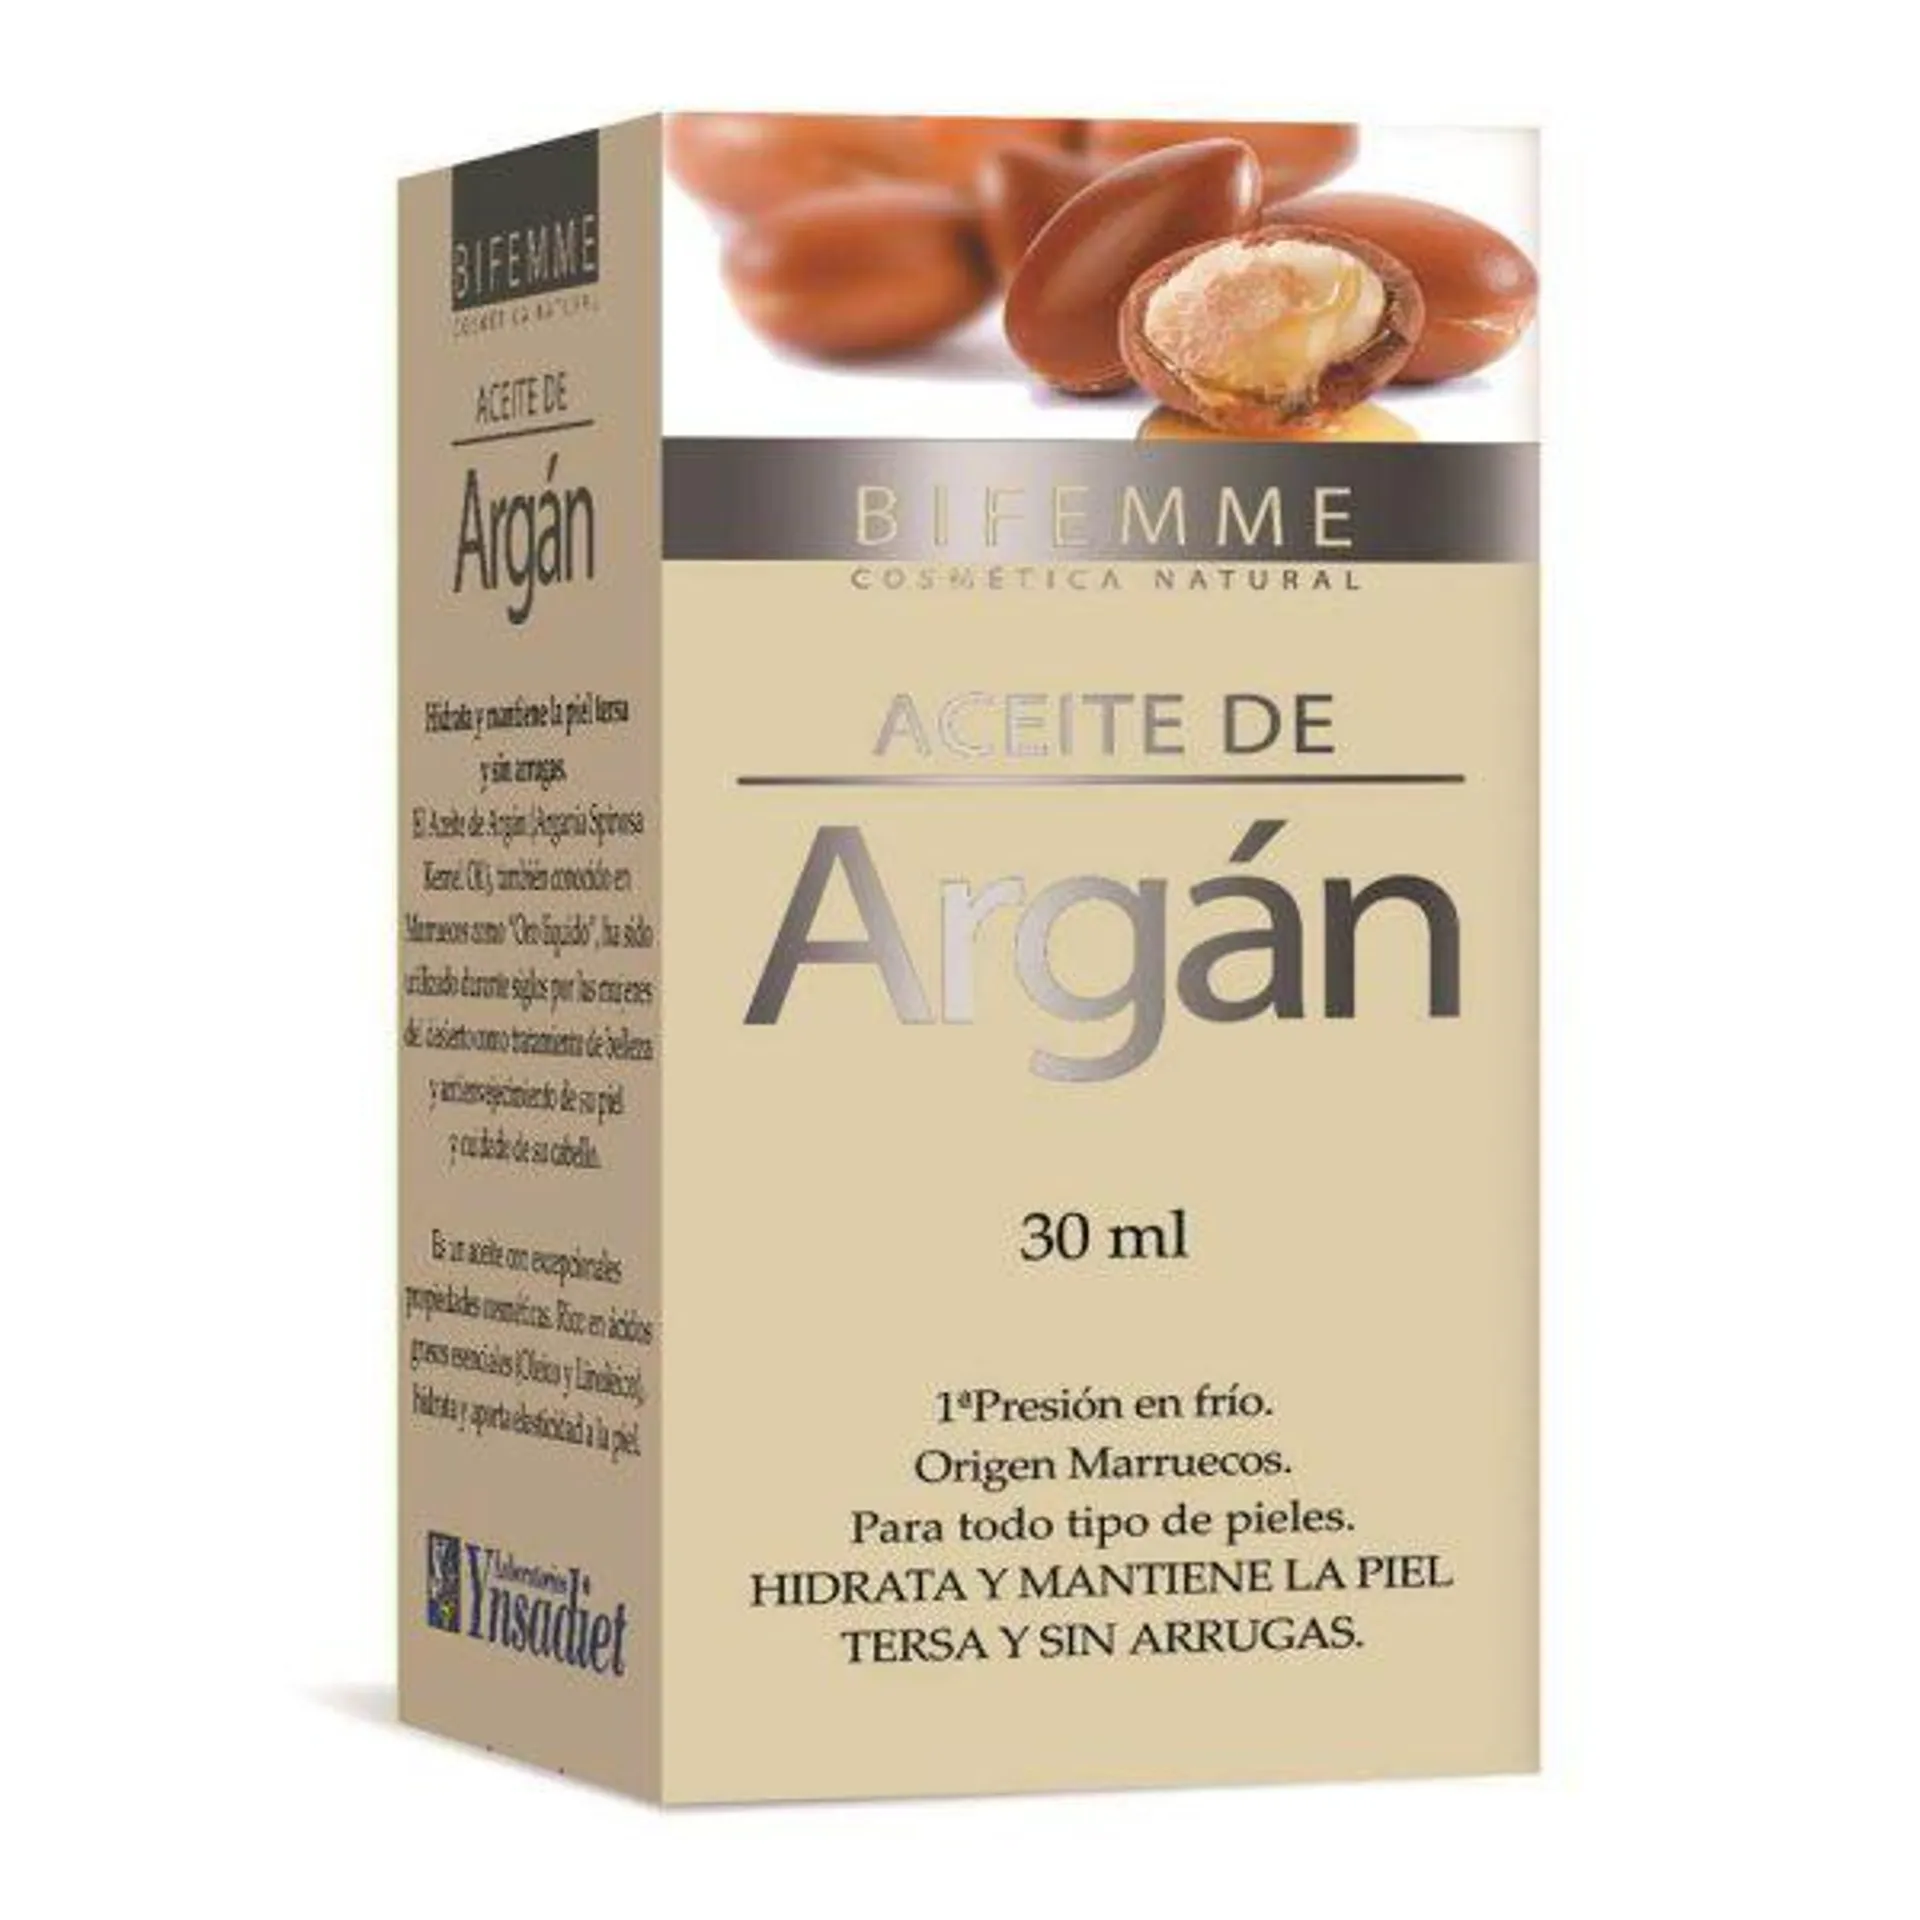 Aceite de Argán (30ml) – Ynsadiet